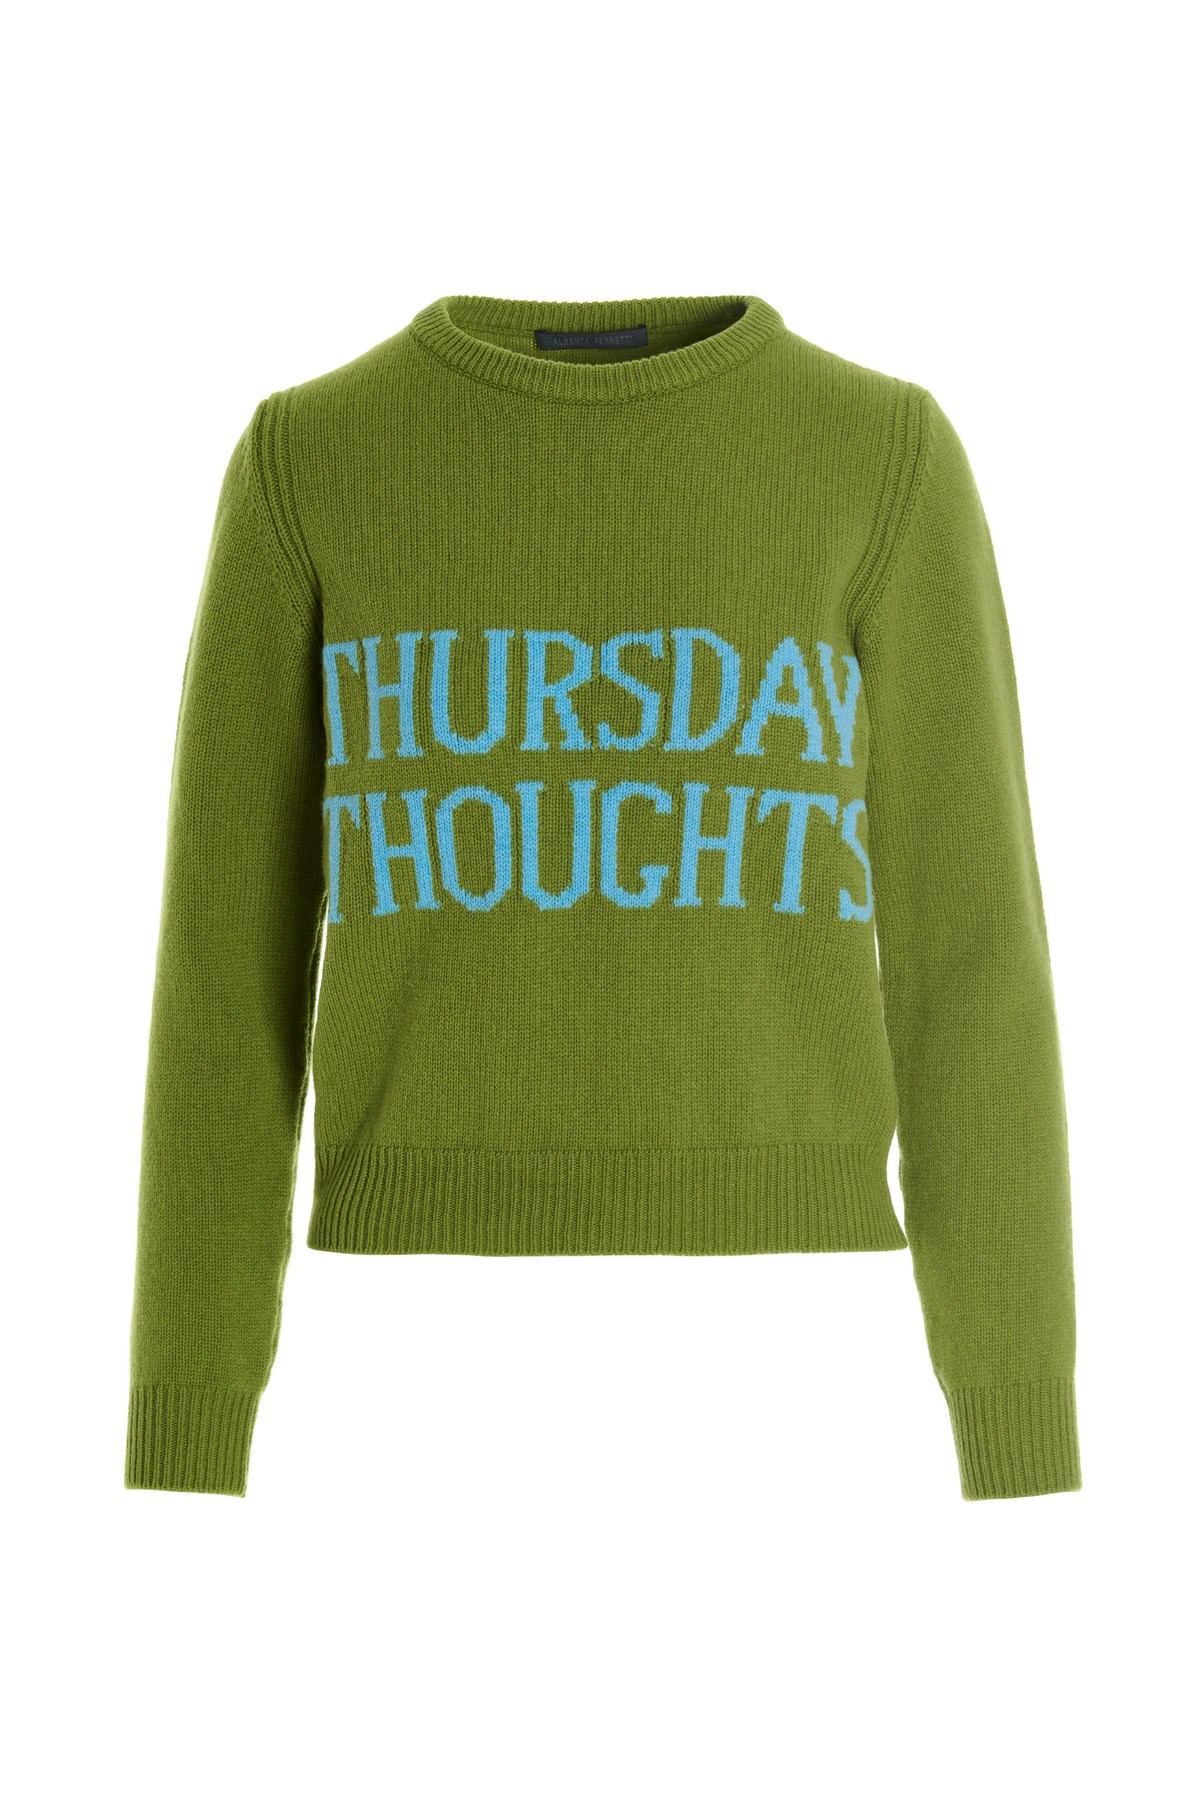 ALBERTA FERRETTI Sweater 'Thursday Thoughts'